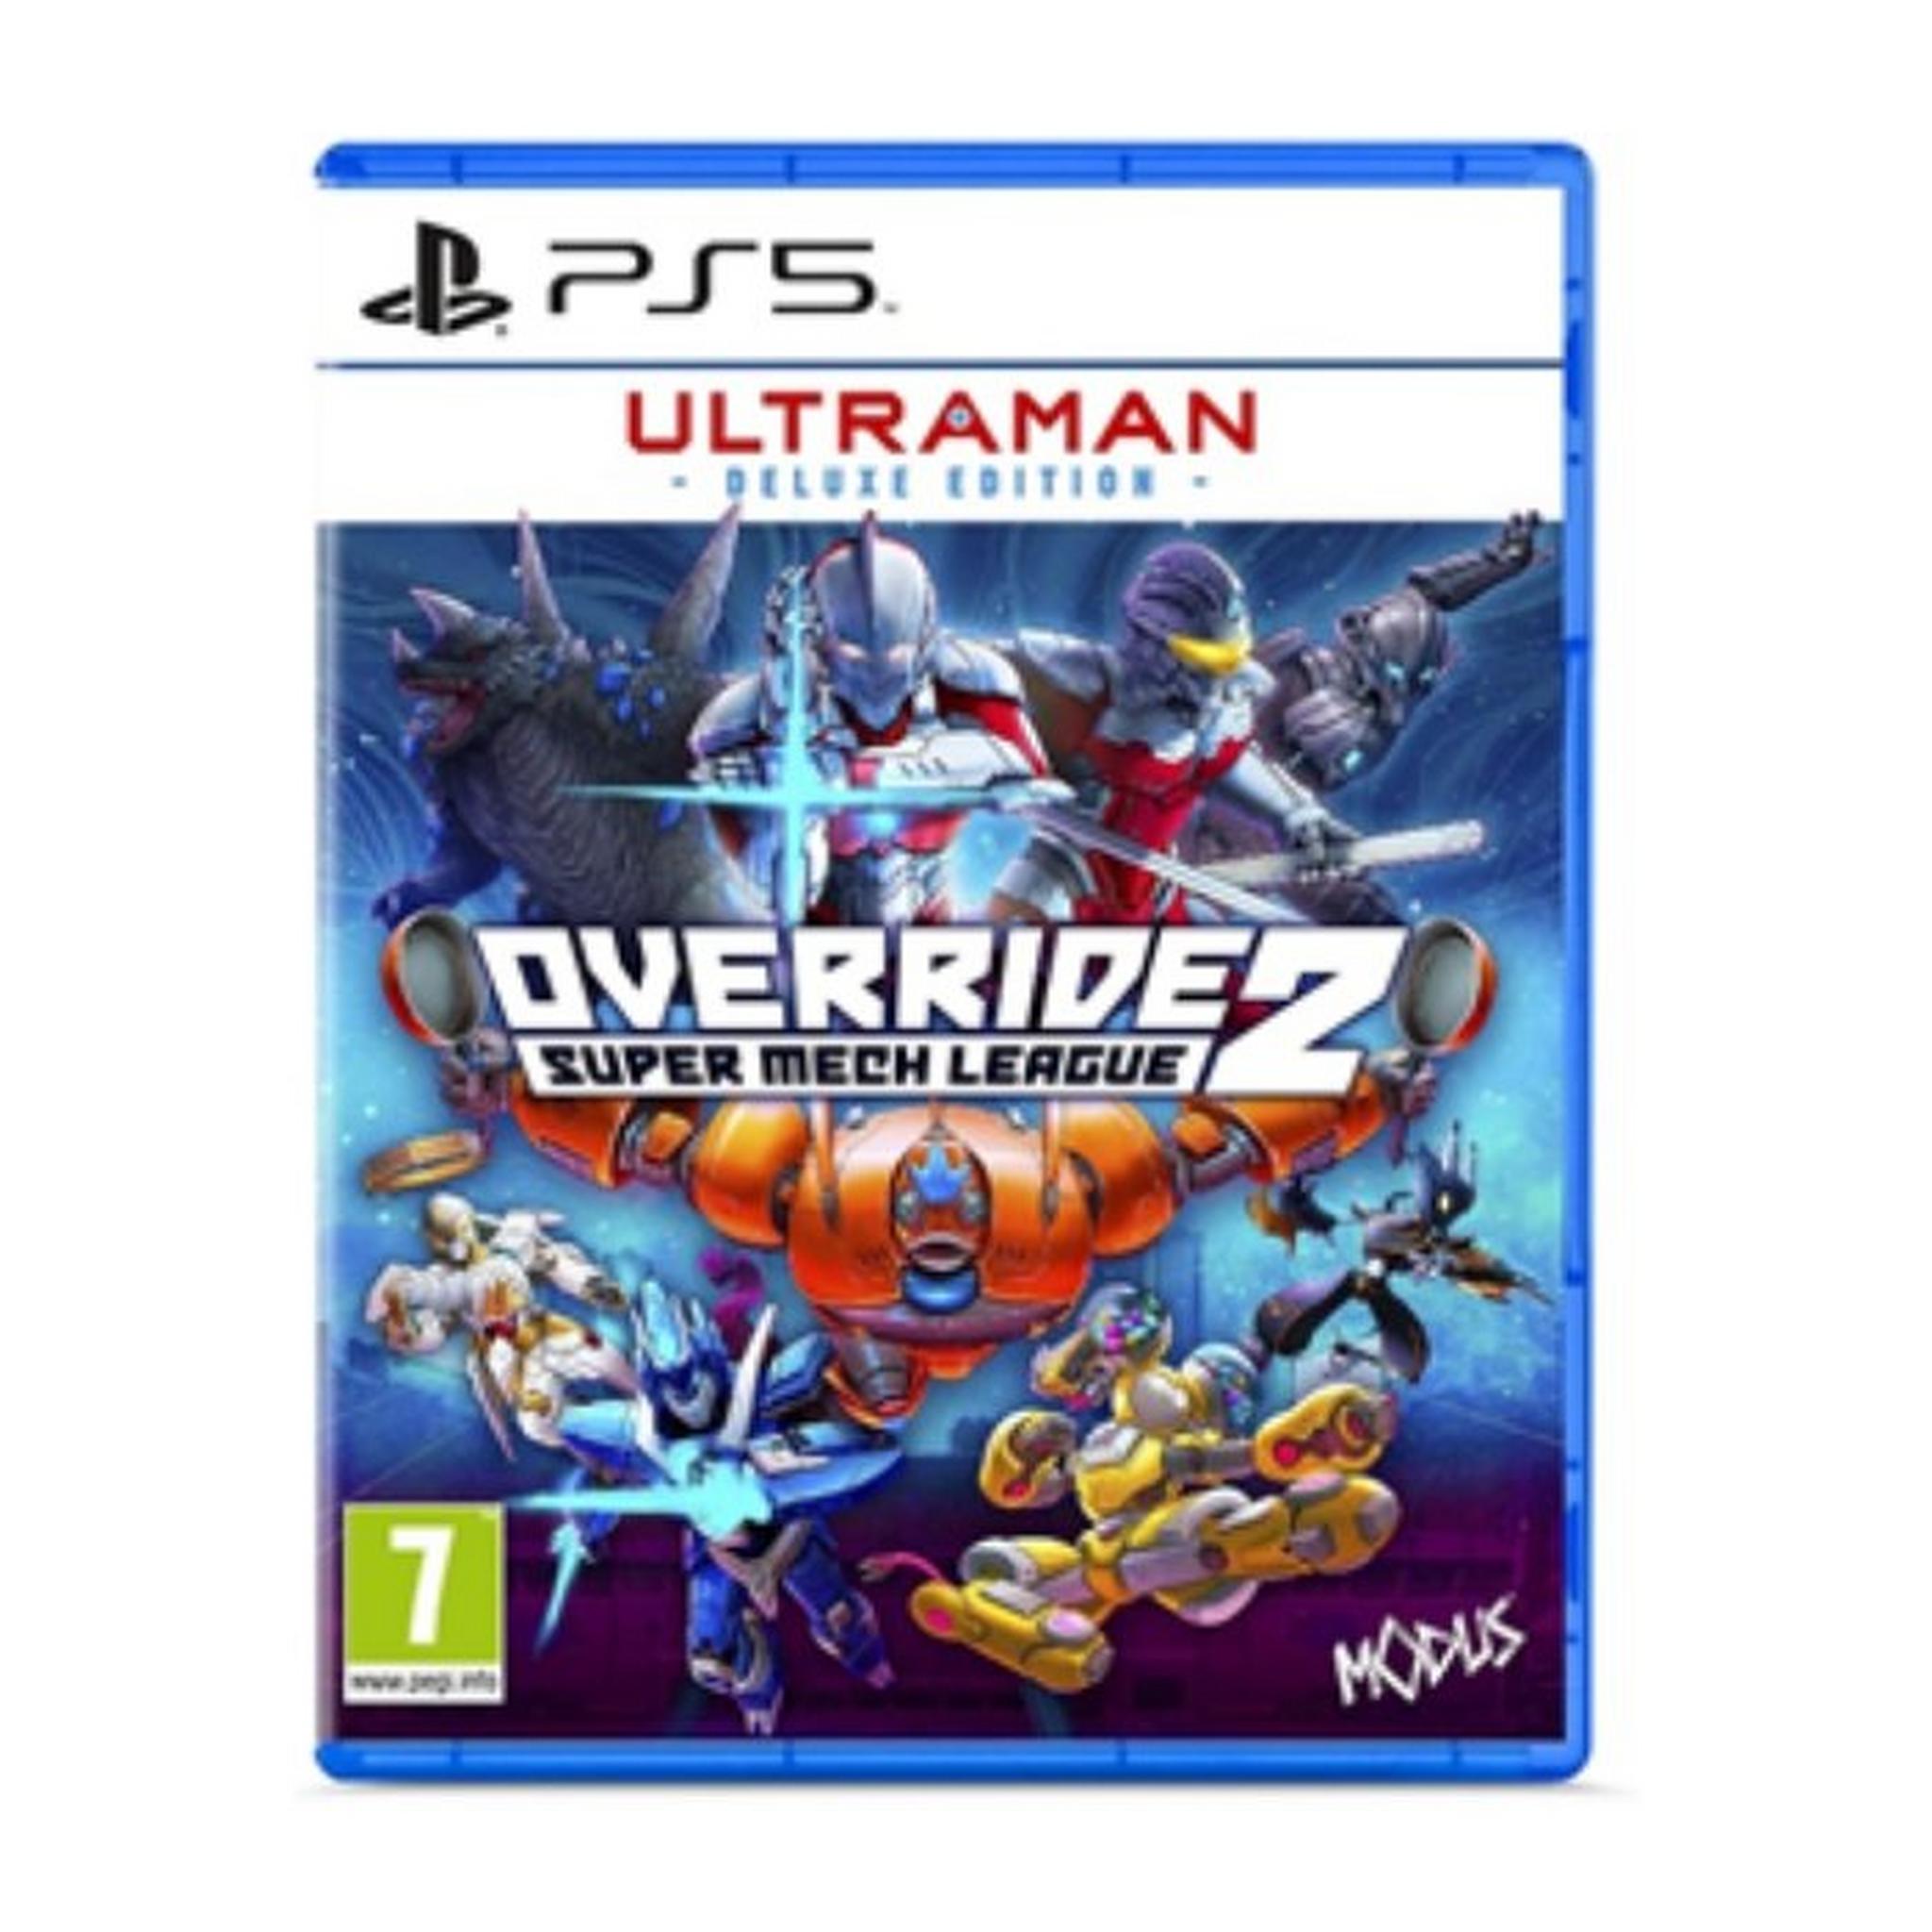 Override 2: Super Mech League - Ultraman Deluxe Edition - PS5 Game